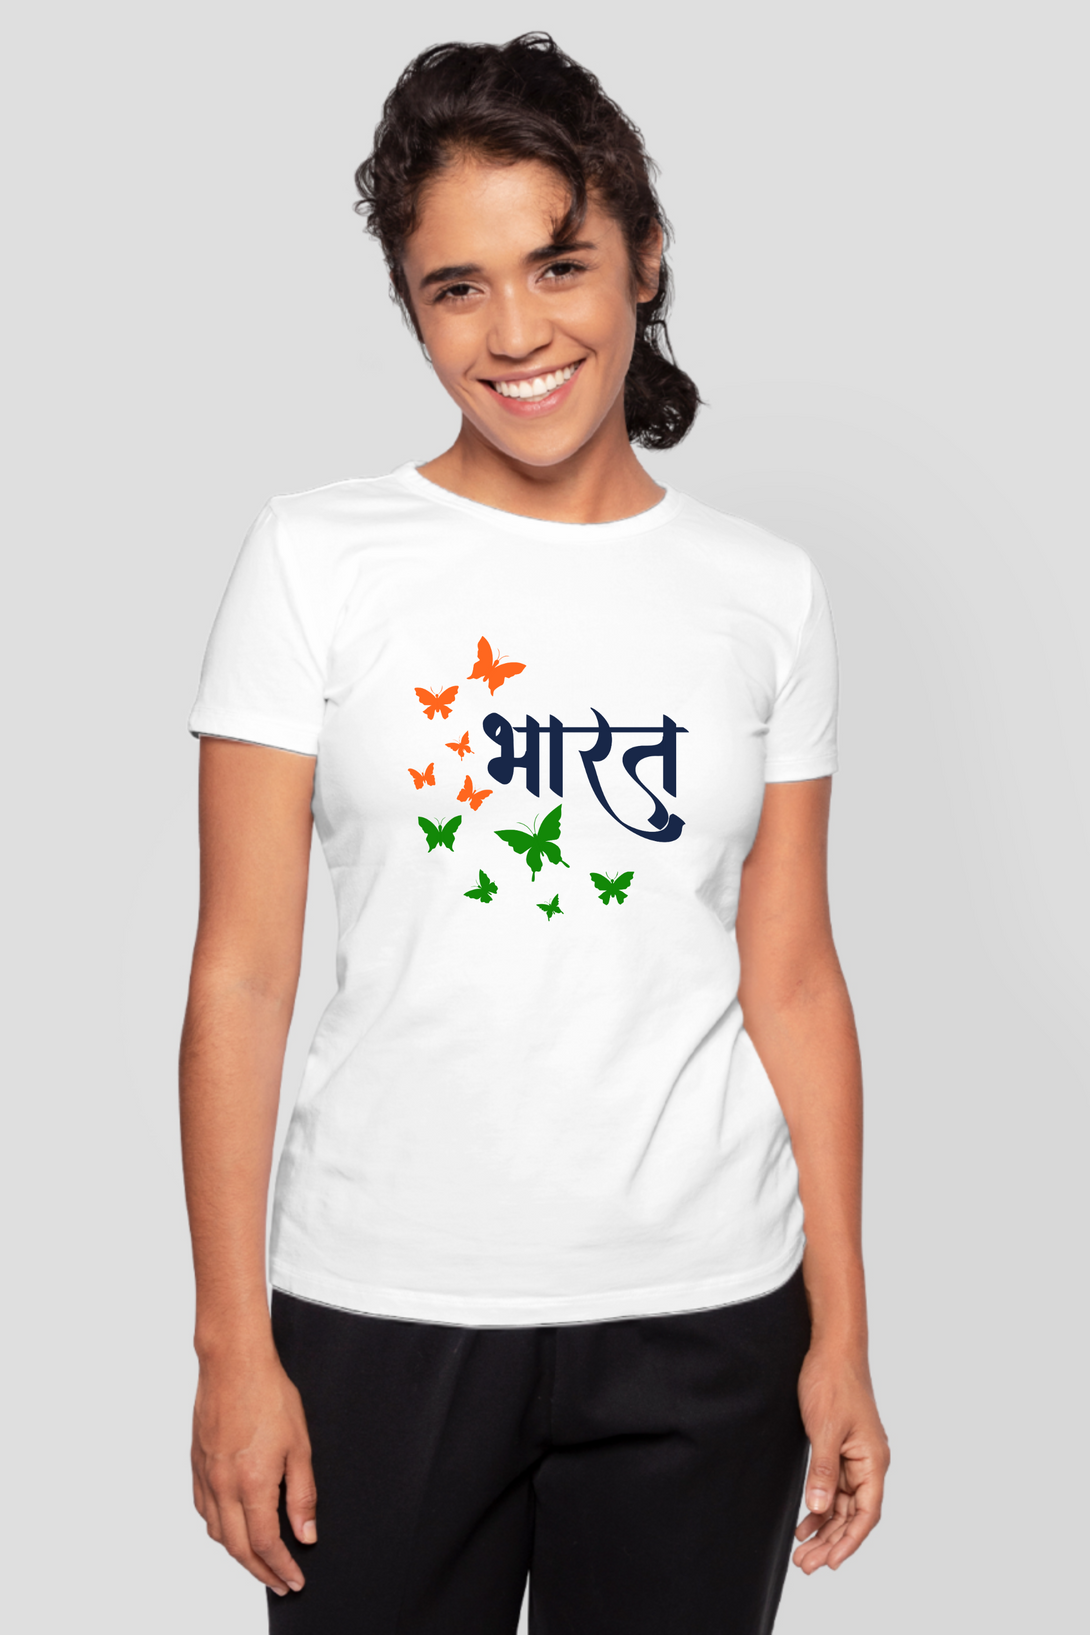 Bharat White Printed T-Shirt For Women - WowWaves - 5